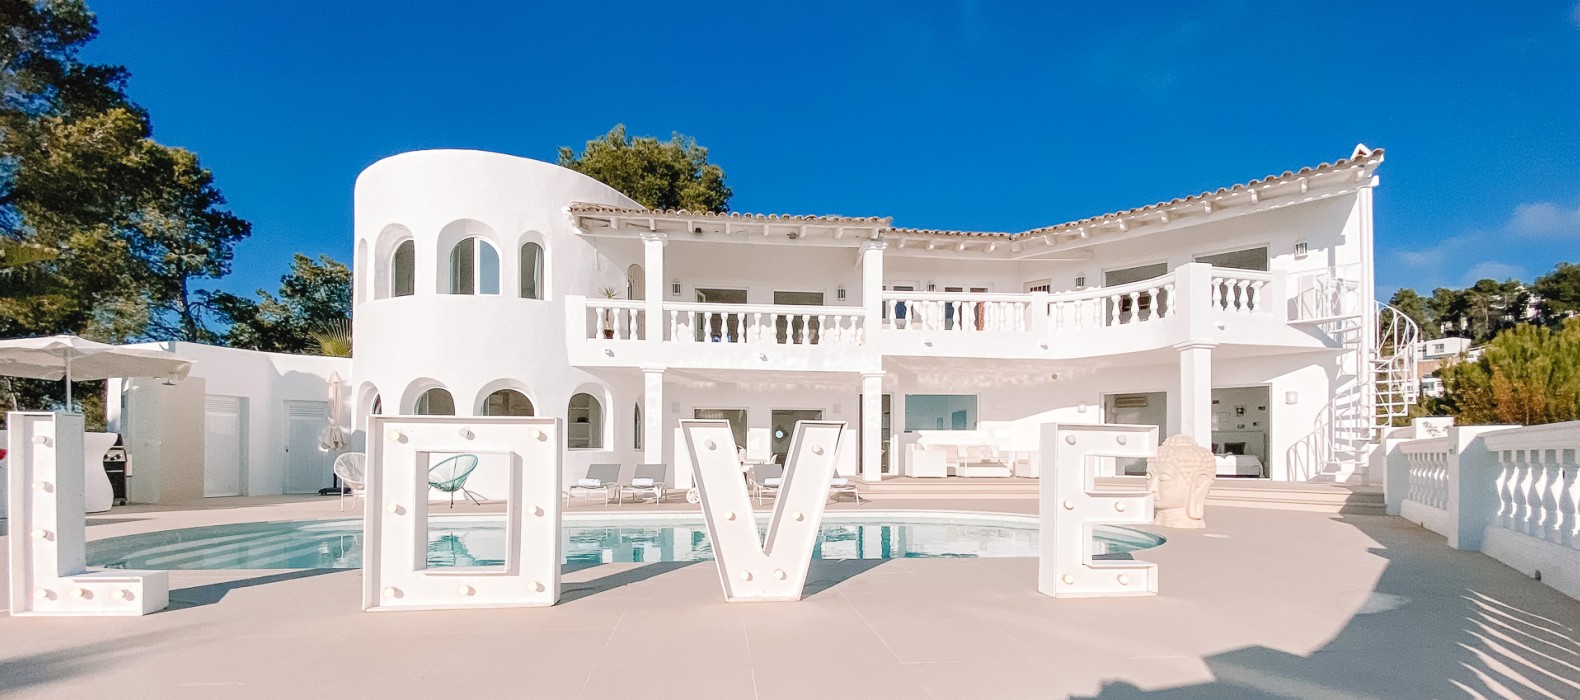 Exterior villa view with love sign of Villa The White Pearl in Ibiza